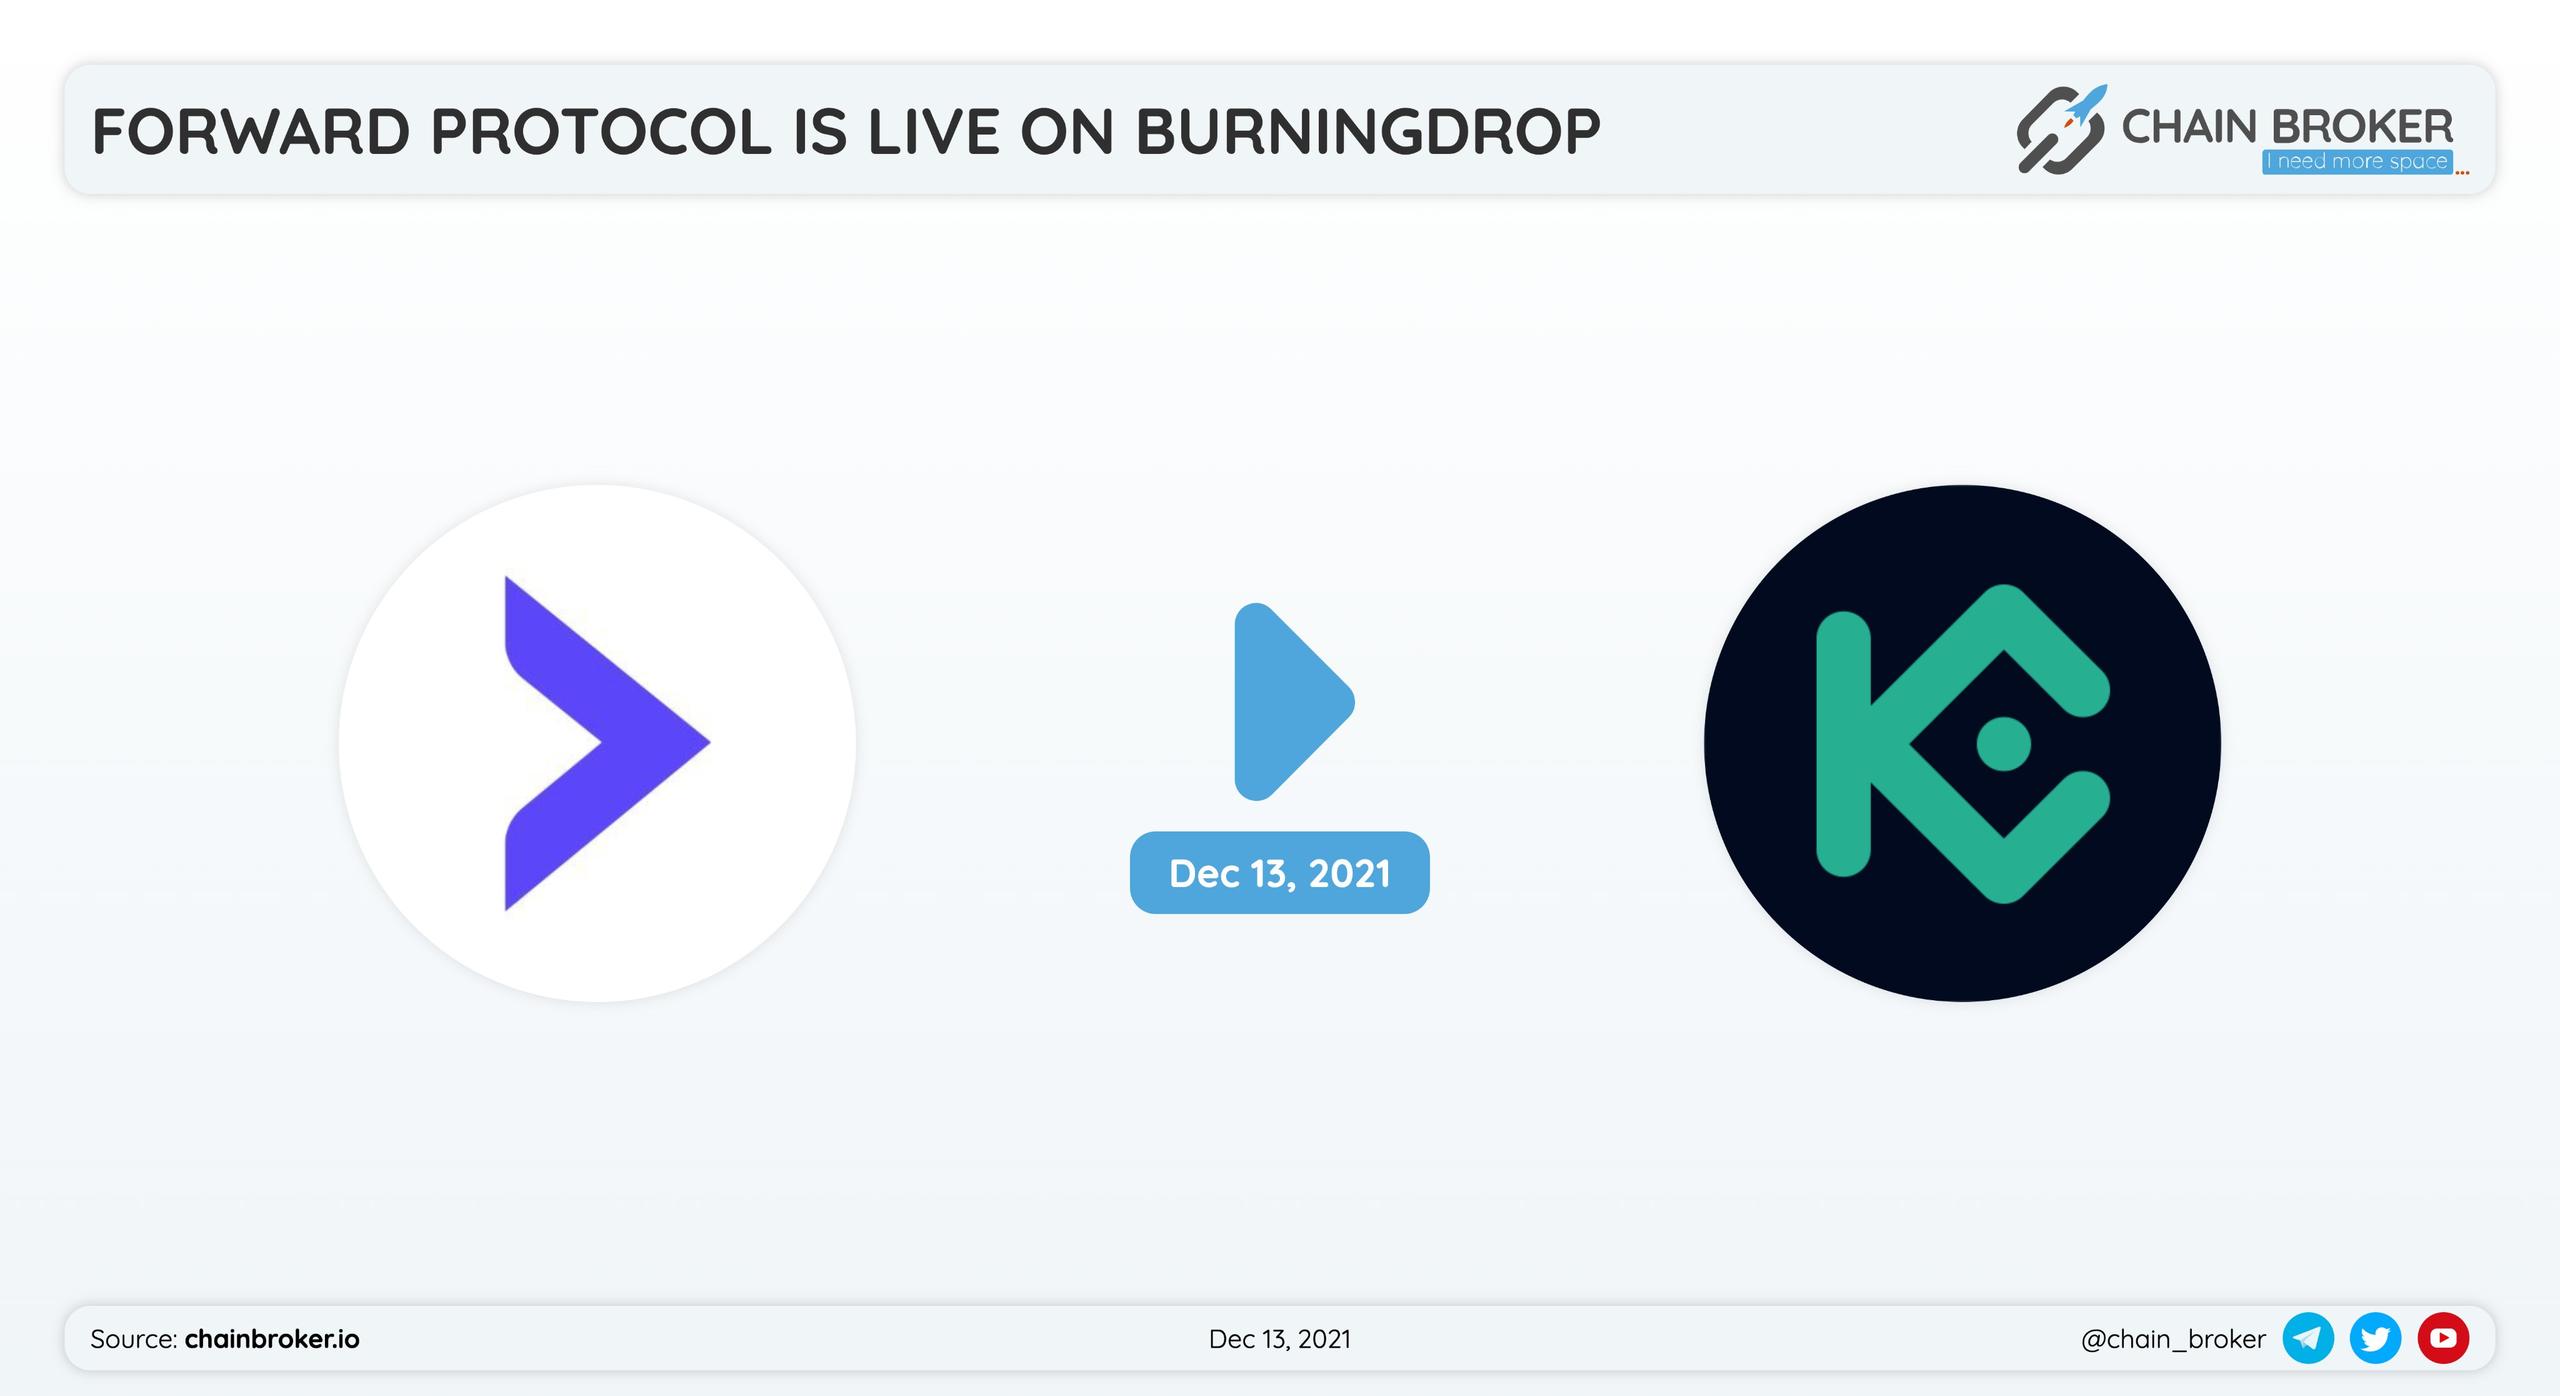 Forward Protocol is live on Kucoin BurningDrop.